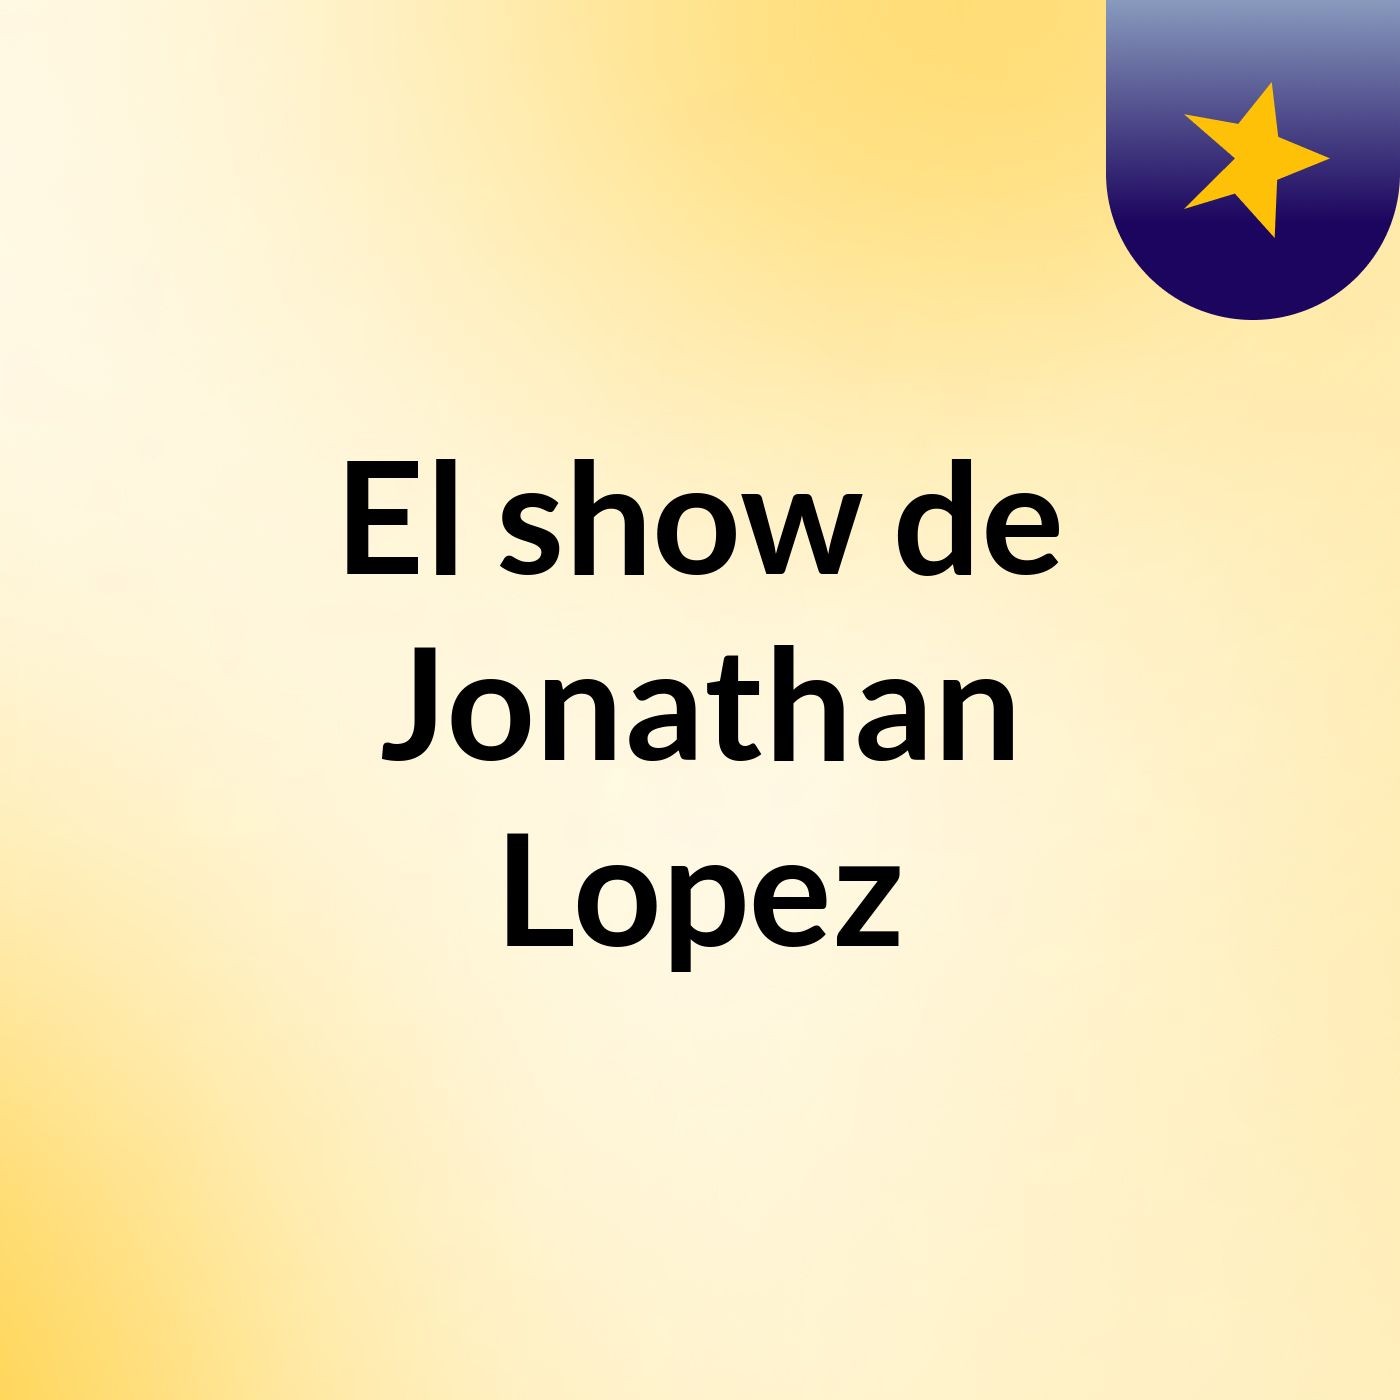 El show de Jonathan Lopez